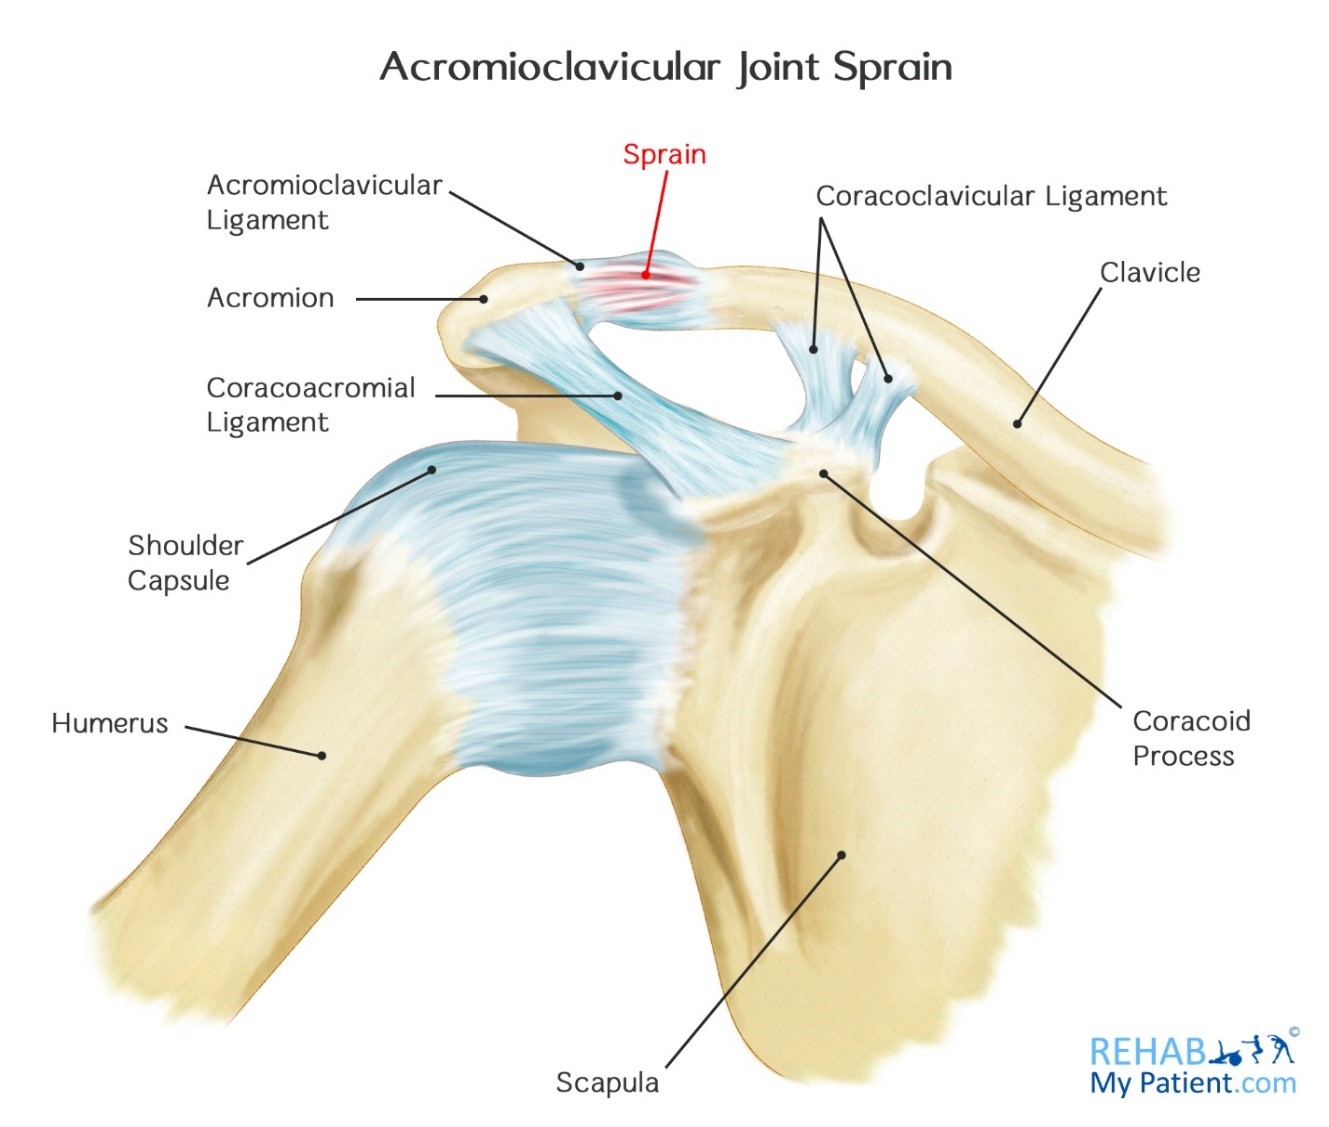 Acromioclavicular Joint Sprain